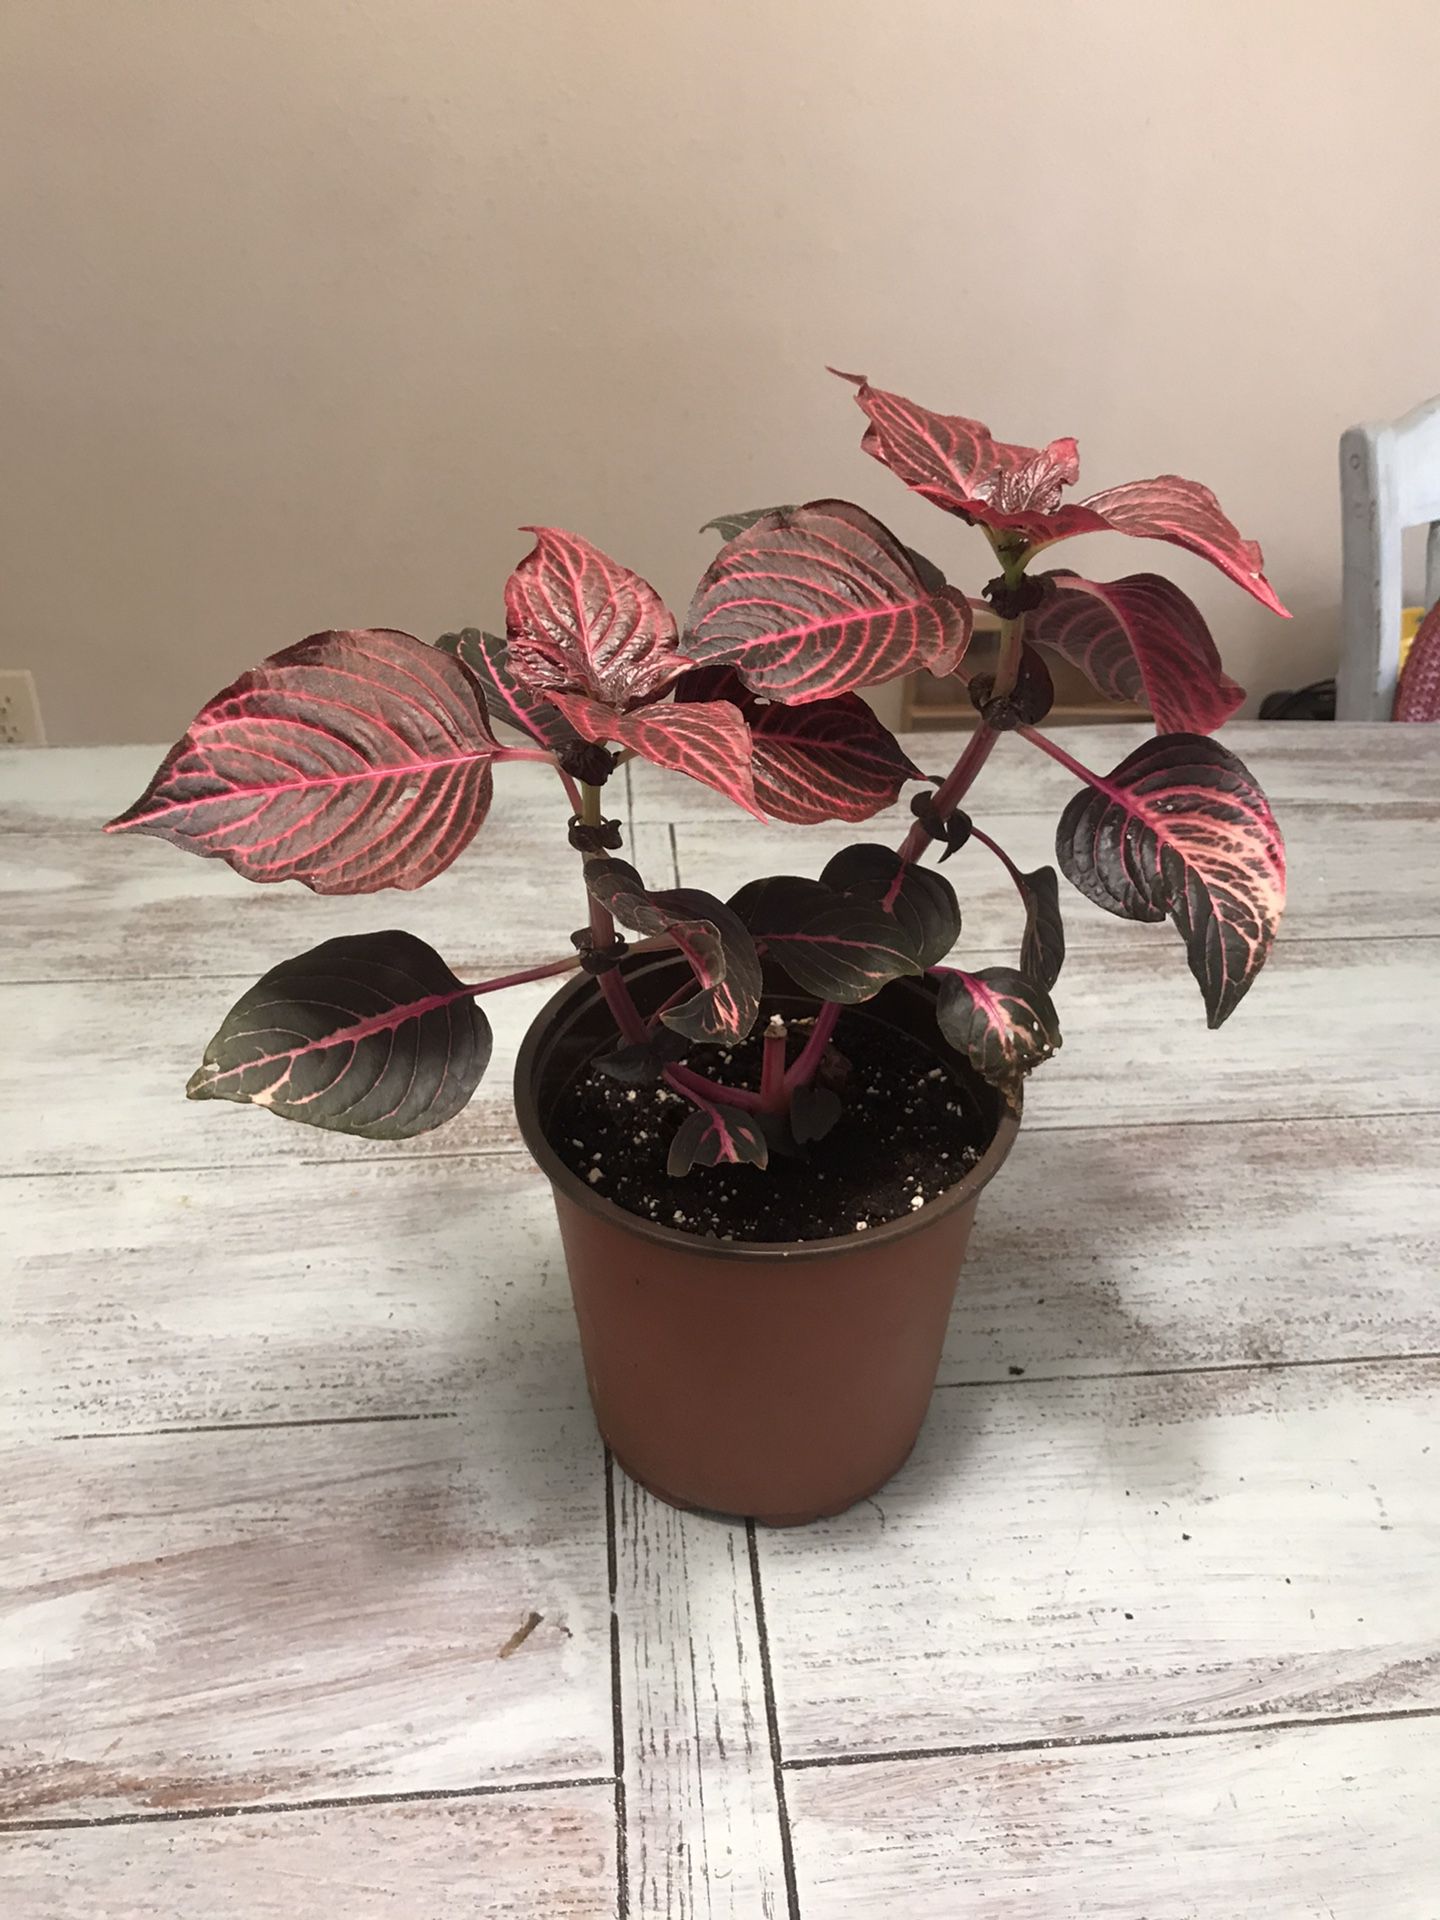 judas bush blood leaf plant for Sale in Grand Prairie, TX - OfferUp